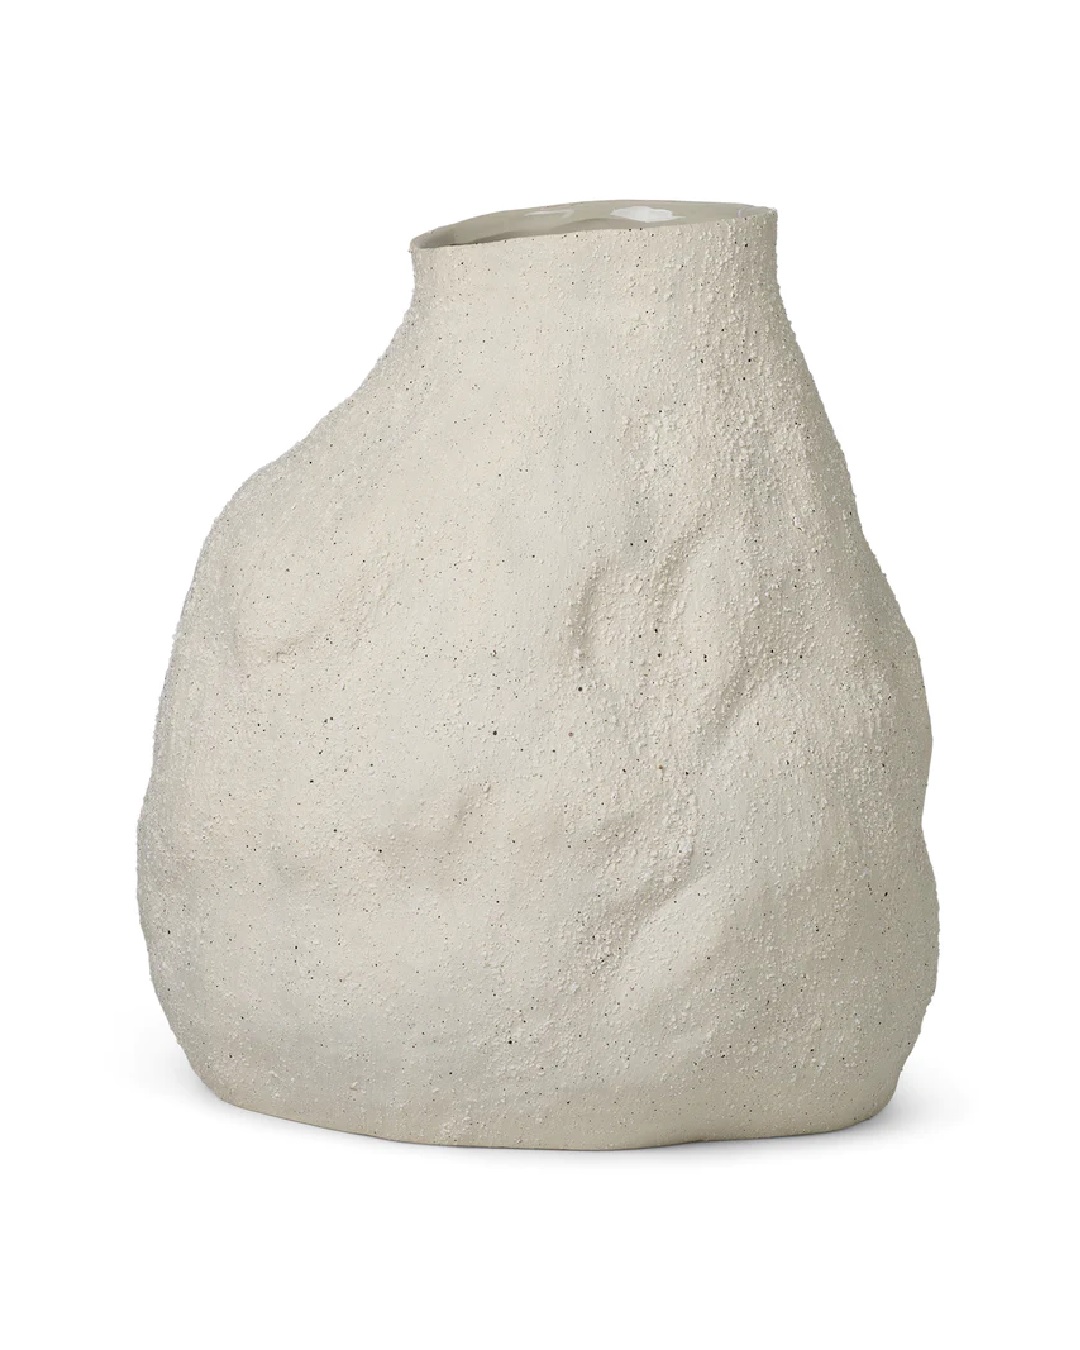 Vulca vase off white stone large